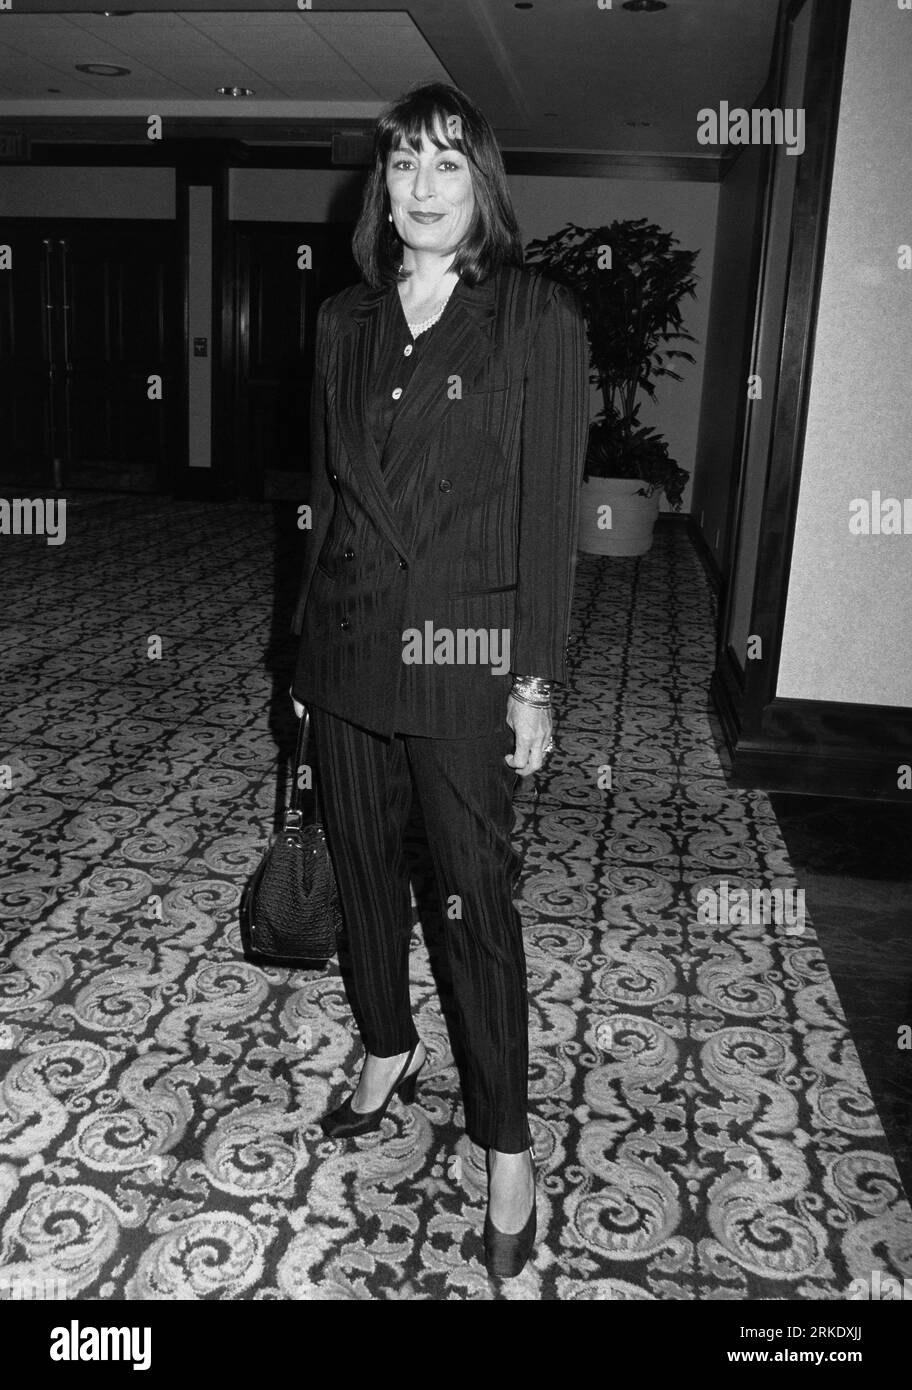 LOS ANGELES, CA. 21. Juni 1996: Schauspielerin Anjelica Huston bei den Women in Film Crystal + Lucy Awards im Century Plaza Hotel. Bild: Paul Smith / Featureflash Stockfoto